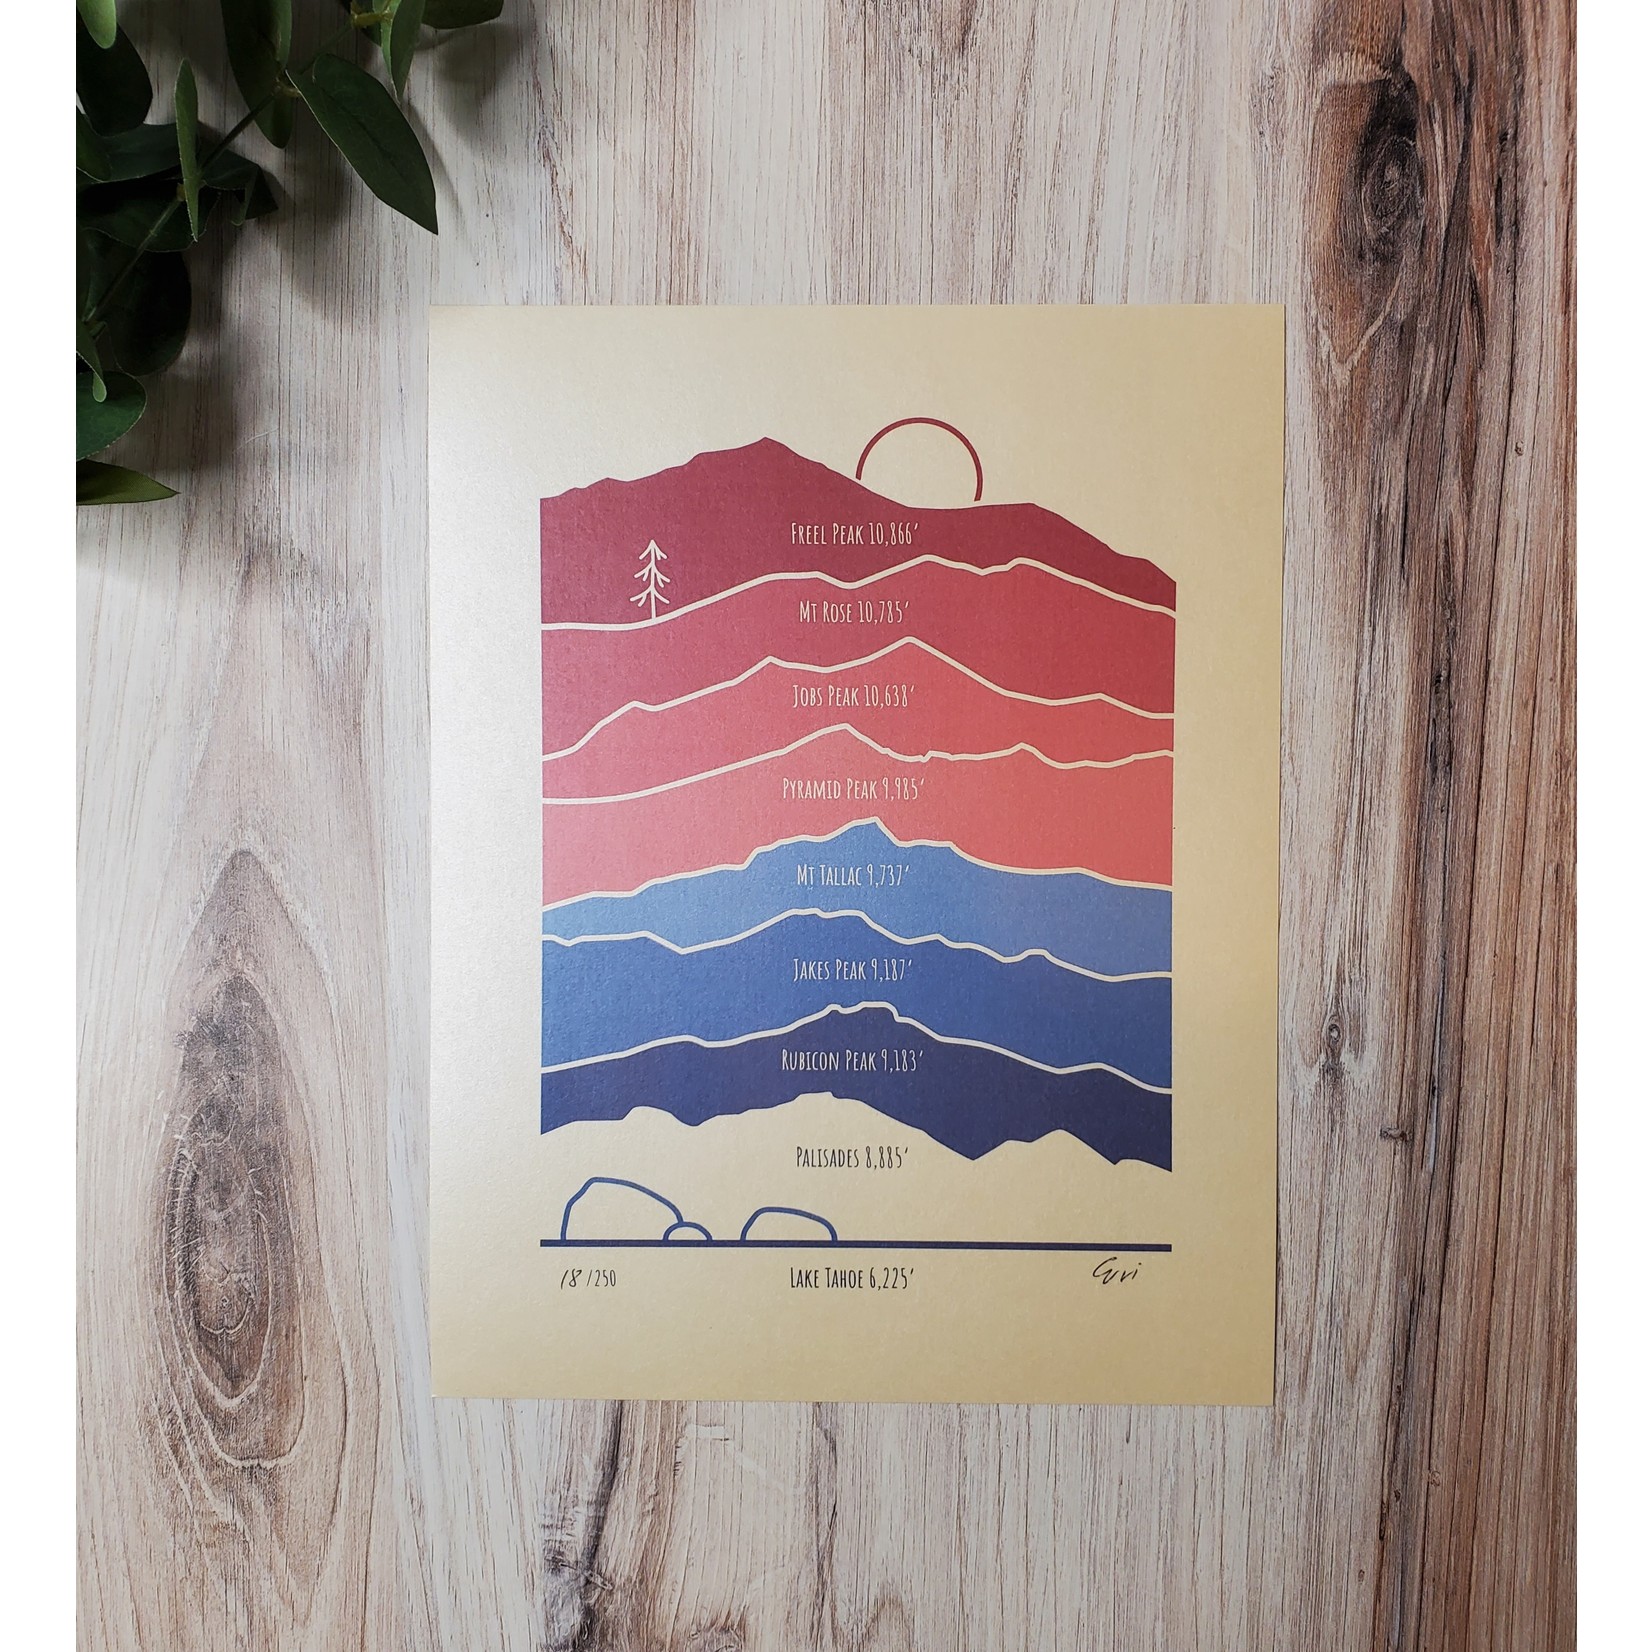 Evi Studio "Tahoe Mountains" - Dusty Rose Giclee Print - 8.5x11"